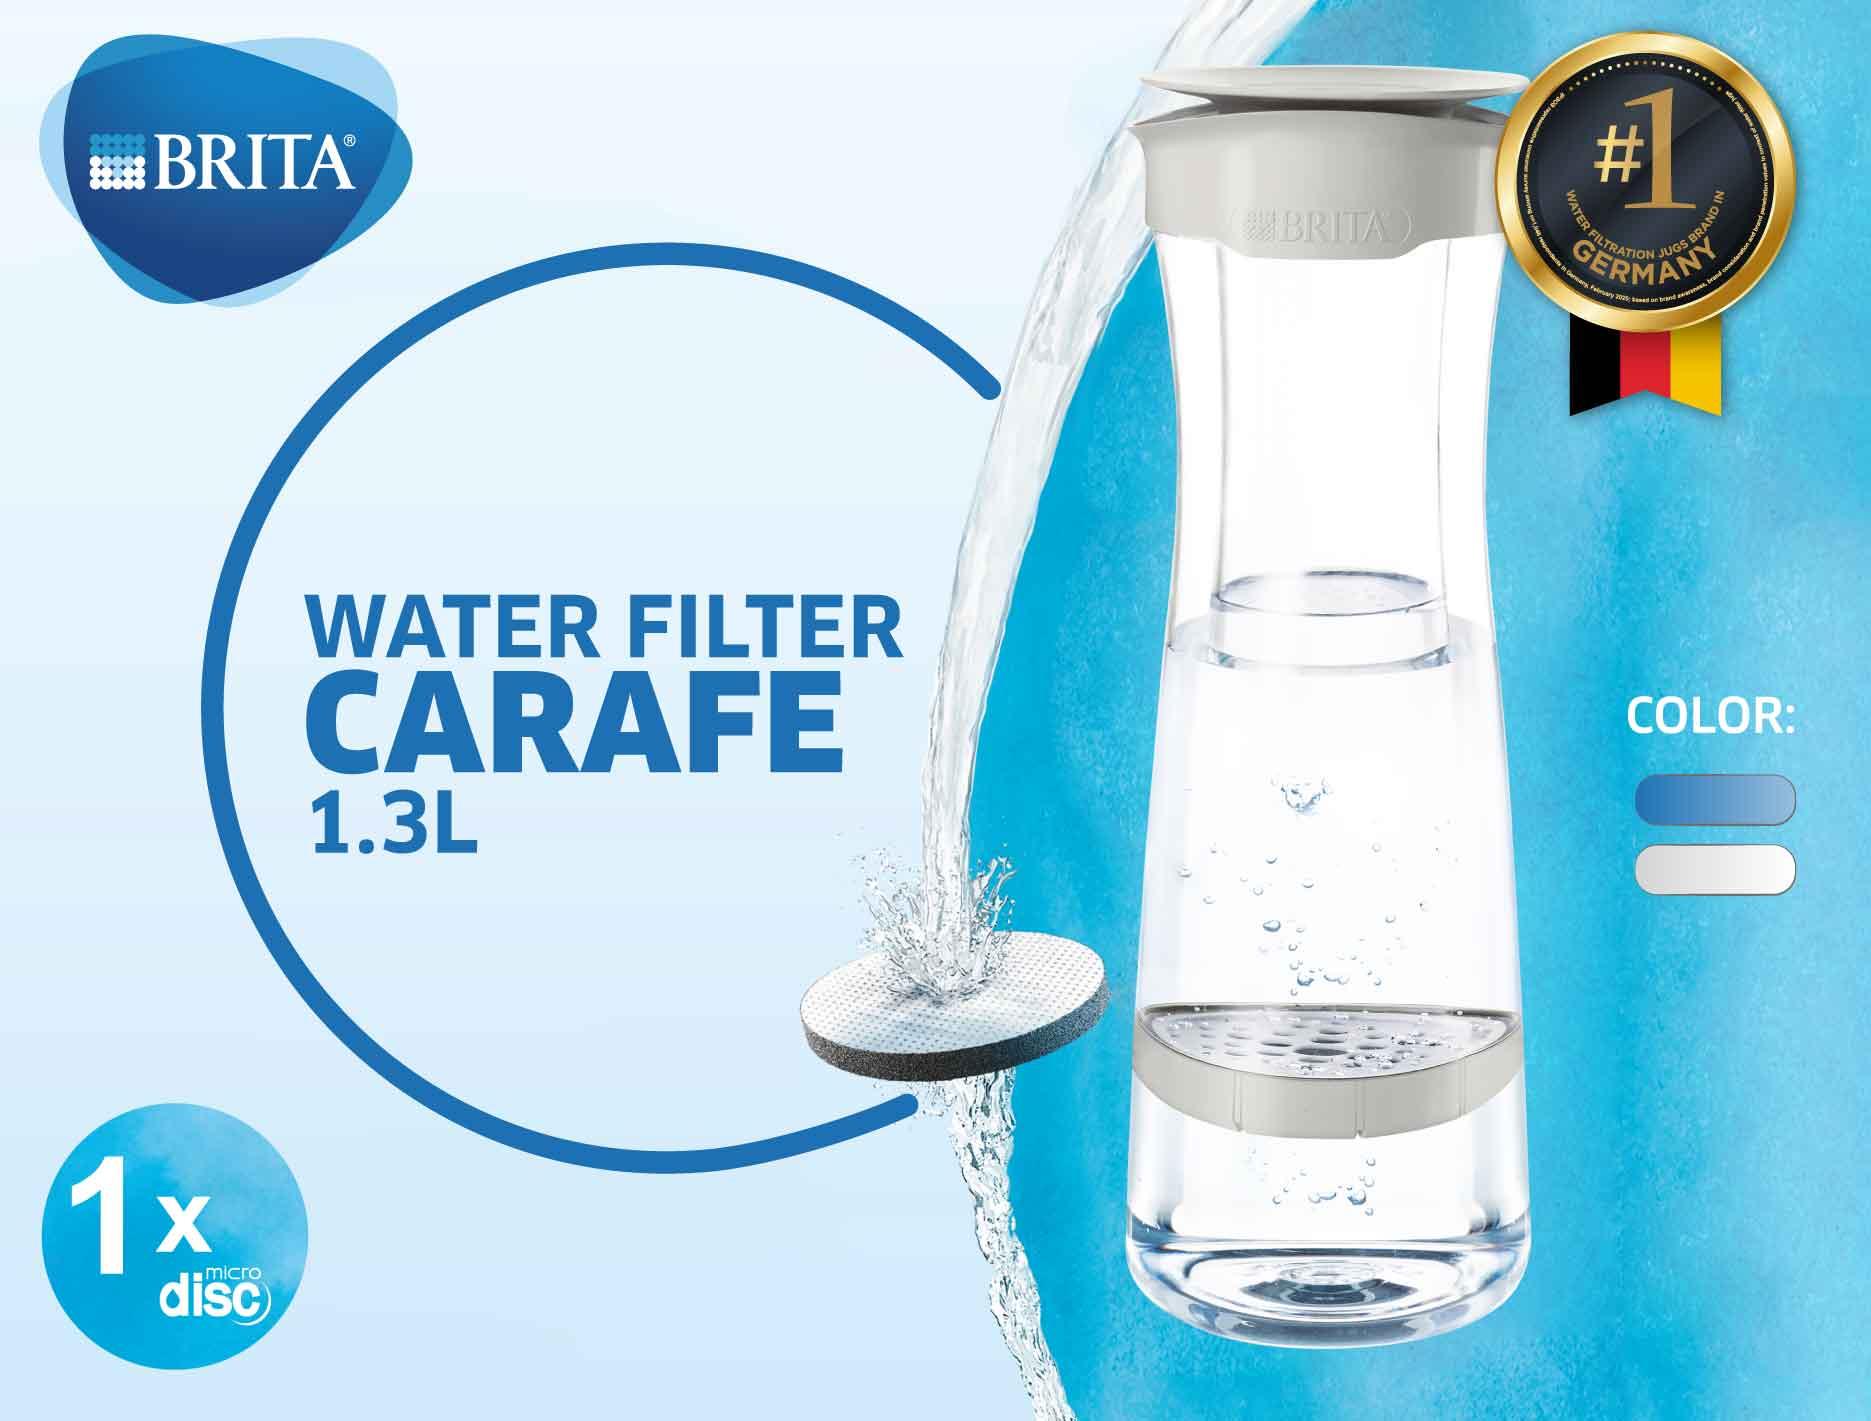 BRITA water filter carafes